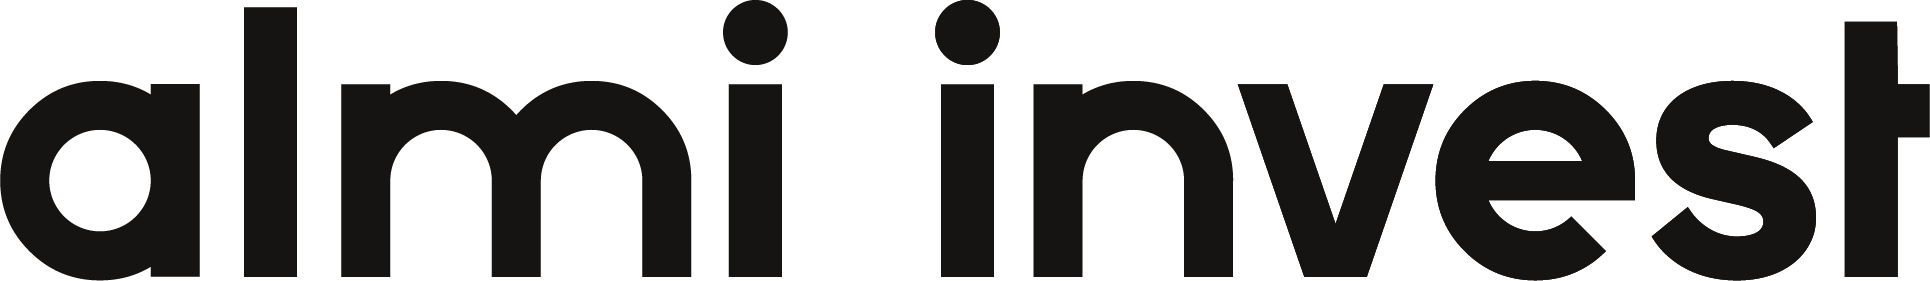 Almi Logo